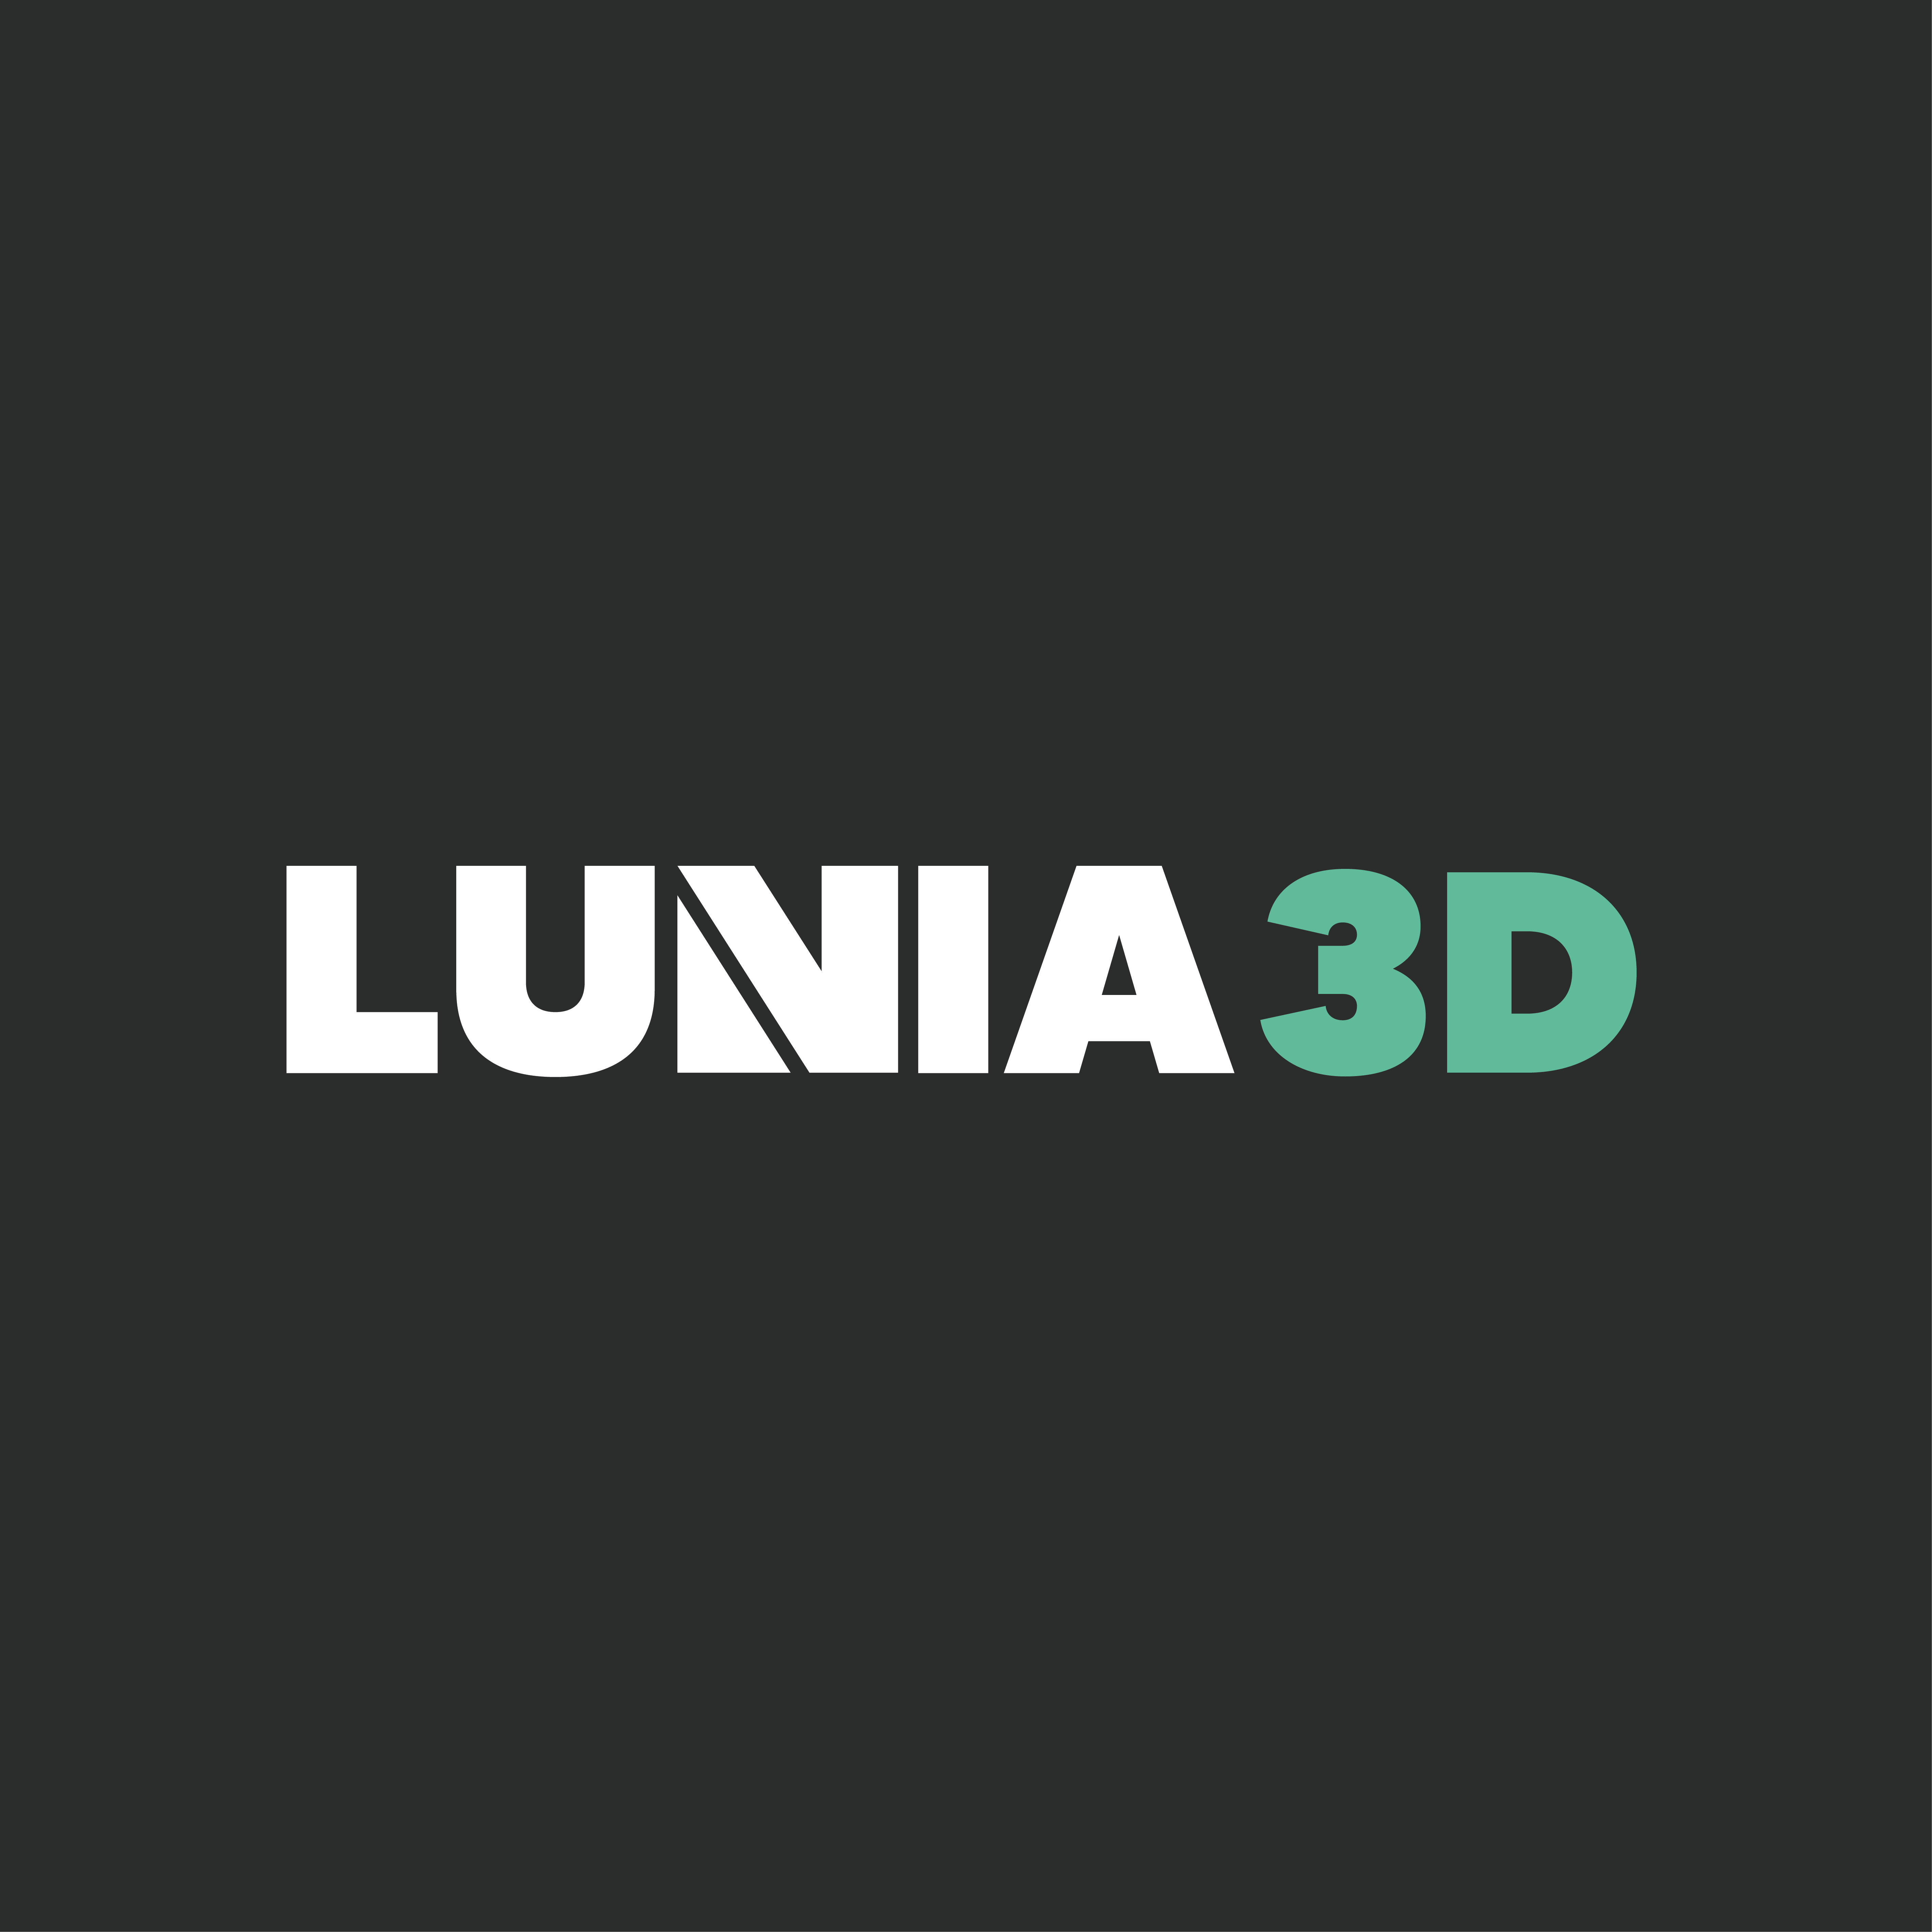 Lunia 3D Logo